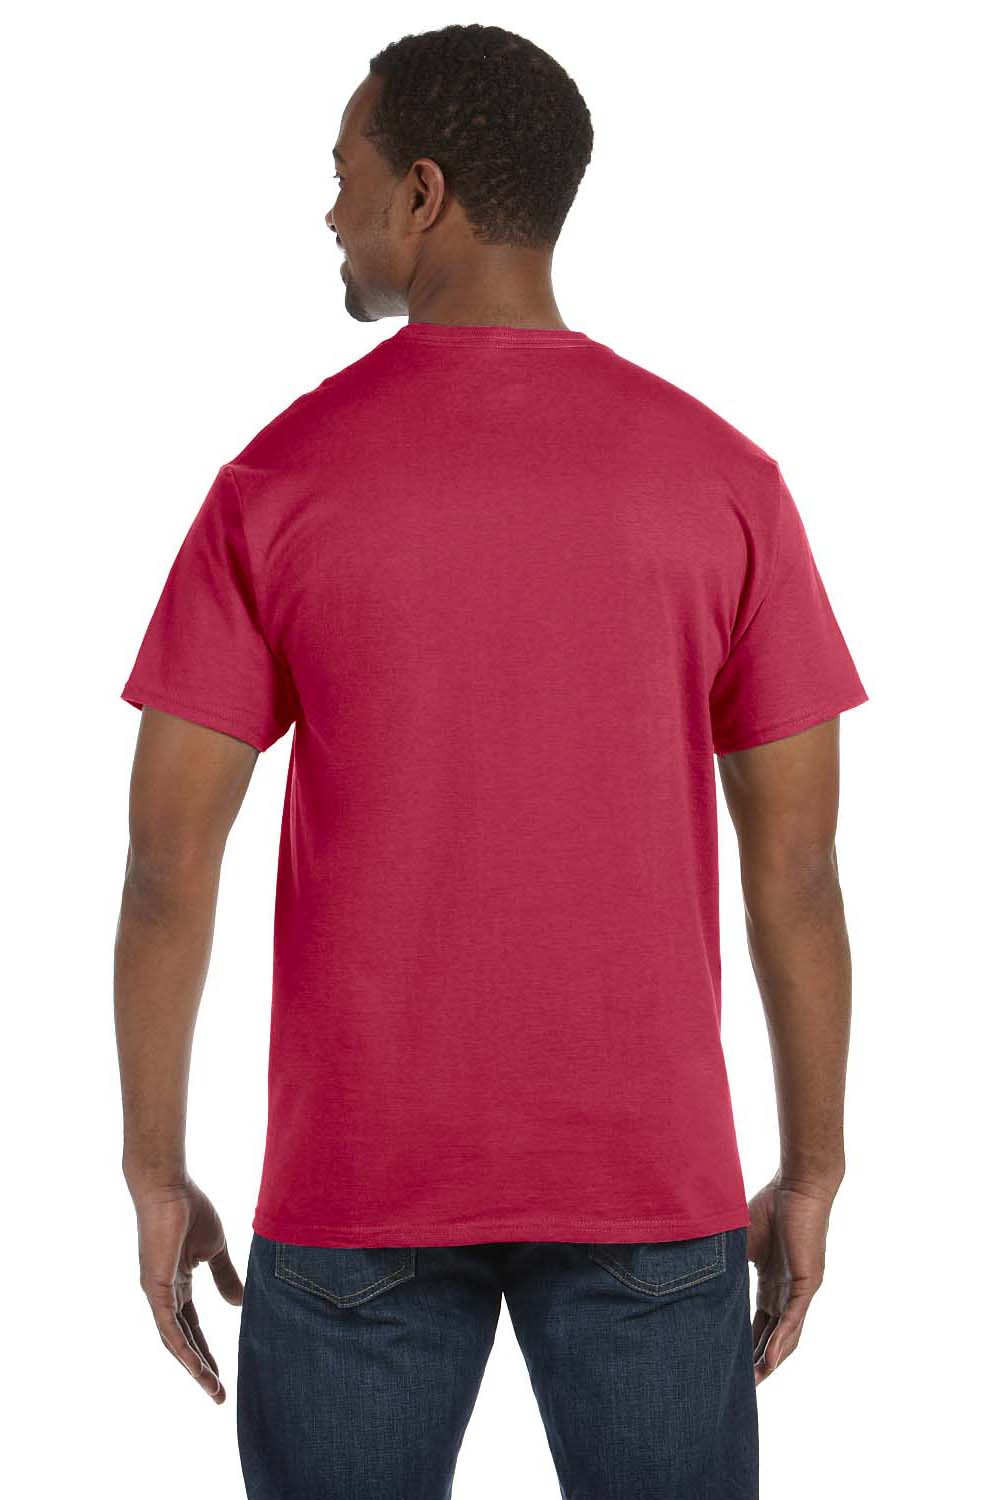 Jerzees 29M Mens Dri-Power Moisture Wicking Short Sleeve Crewneck T-Shirt Heather Red Back